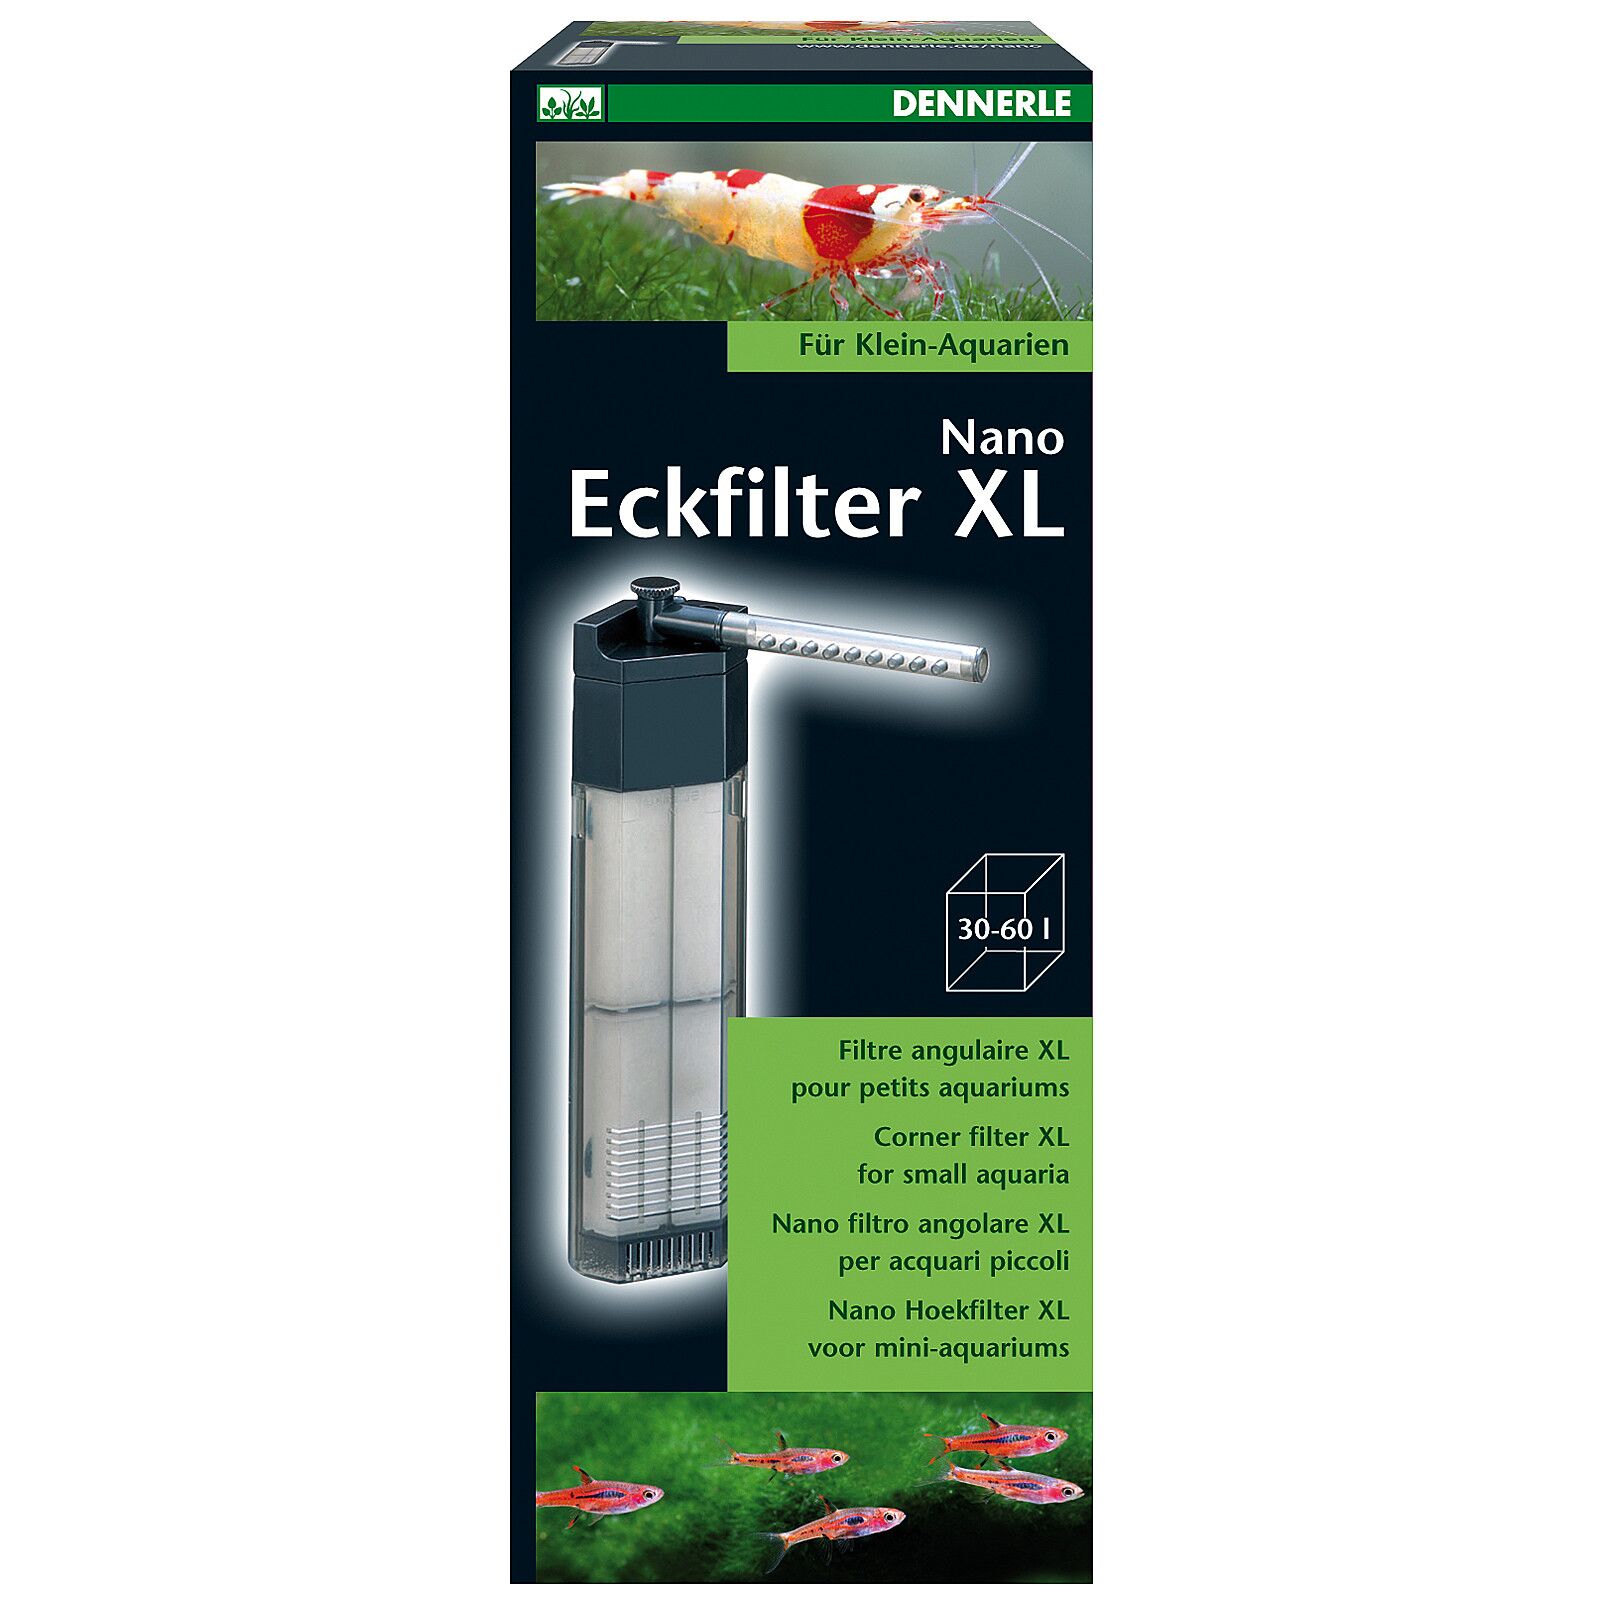 Dennerle - Nano Eckfilter XL